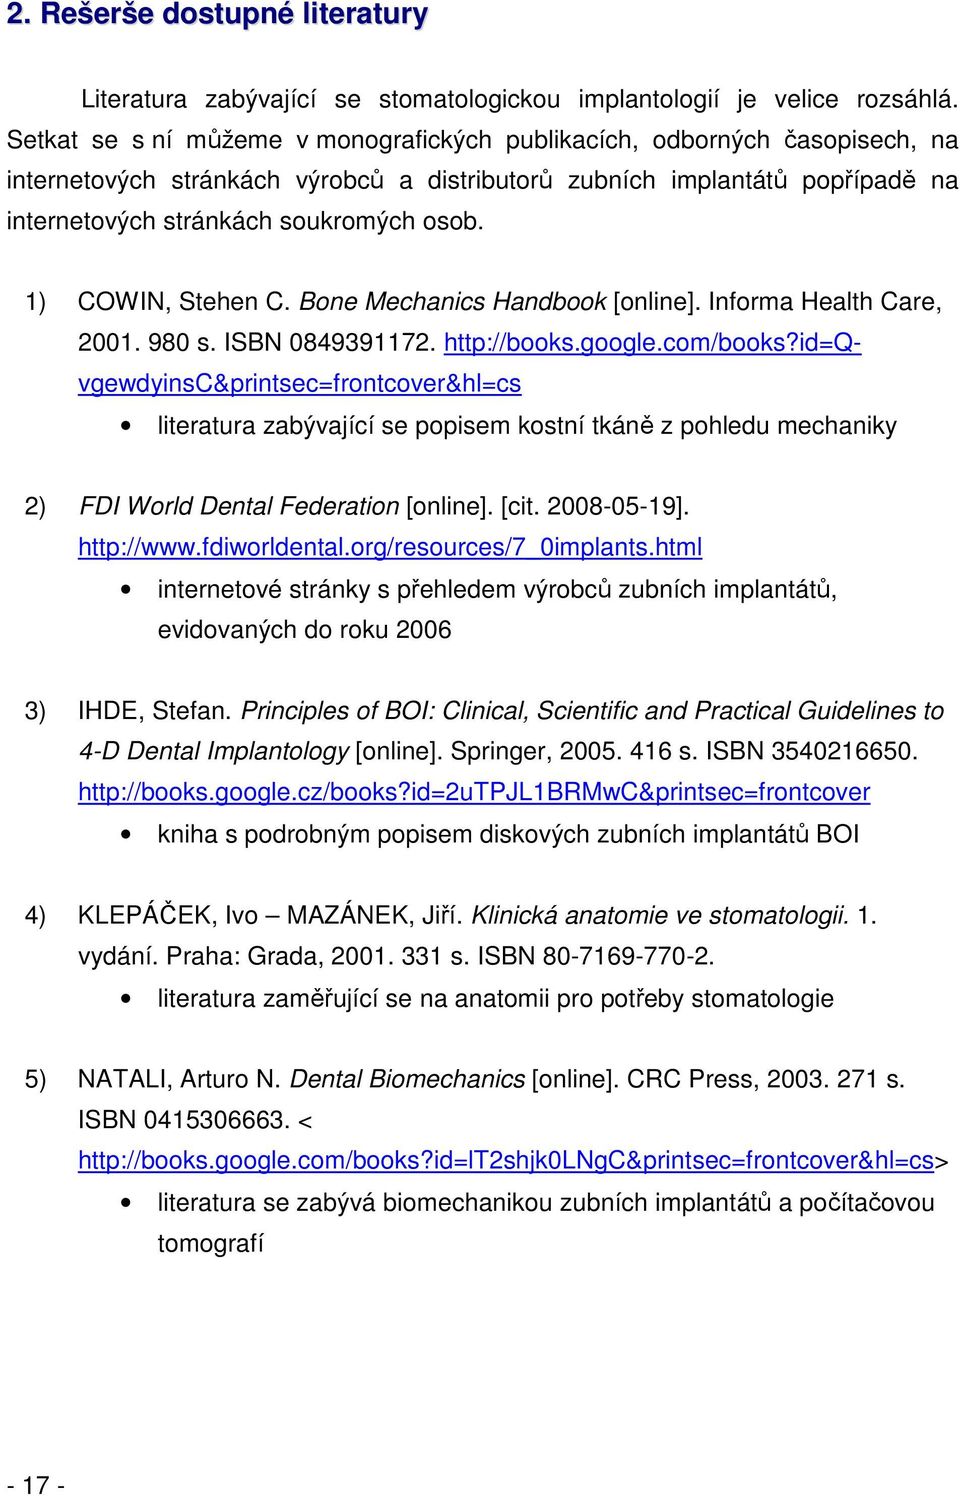 1) COWIN, Stehen C. Bone Mechanics Handbook [online]. Informa Health Care, 2001. 980 s. ISBN 0849391172. http://books.google.com/books?